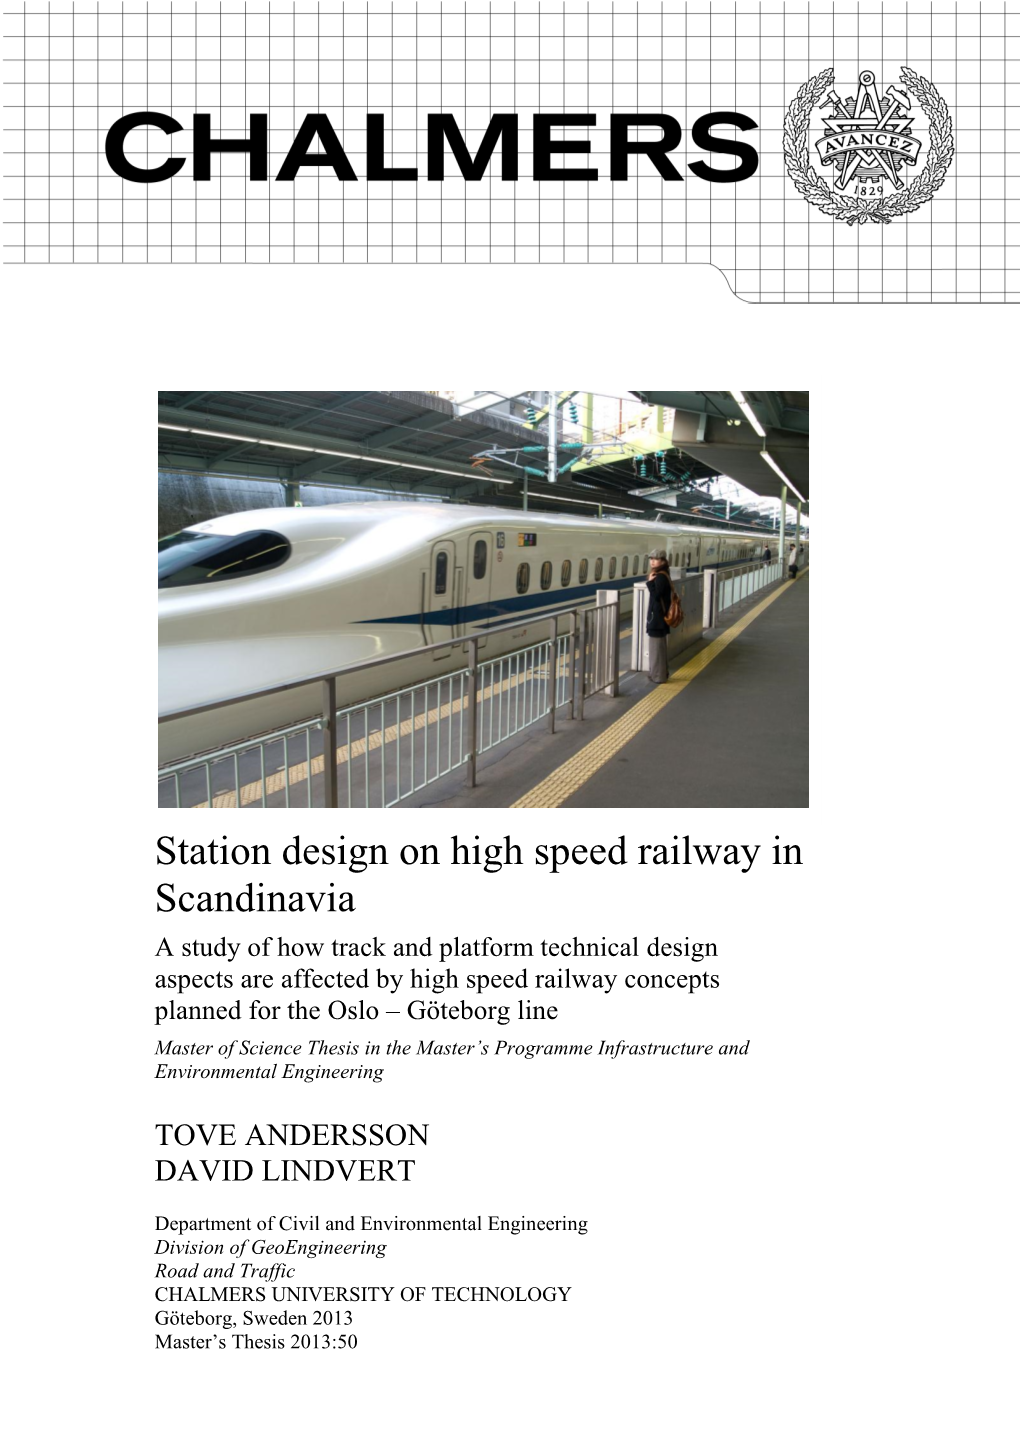 Station Design on High Speed Railway in Scandinavia